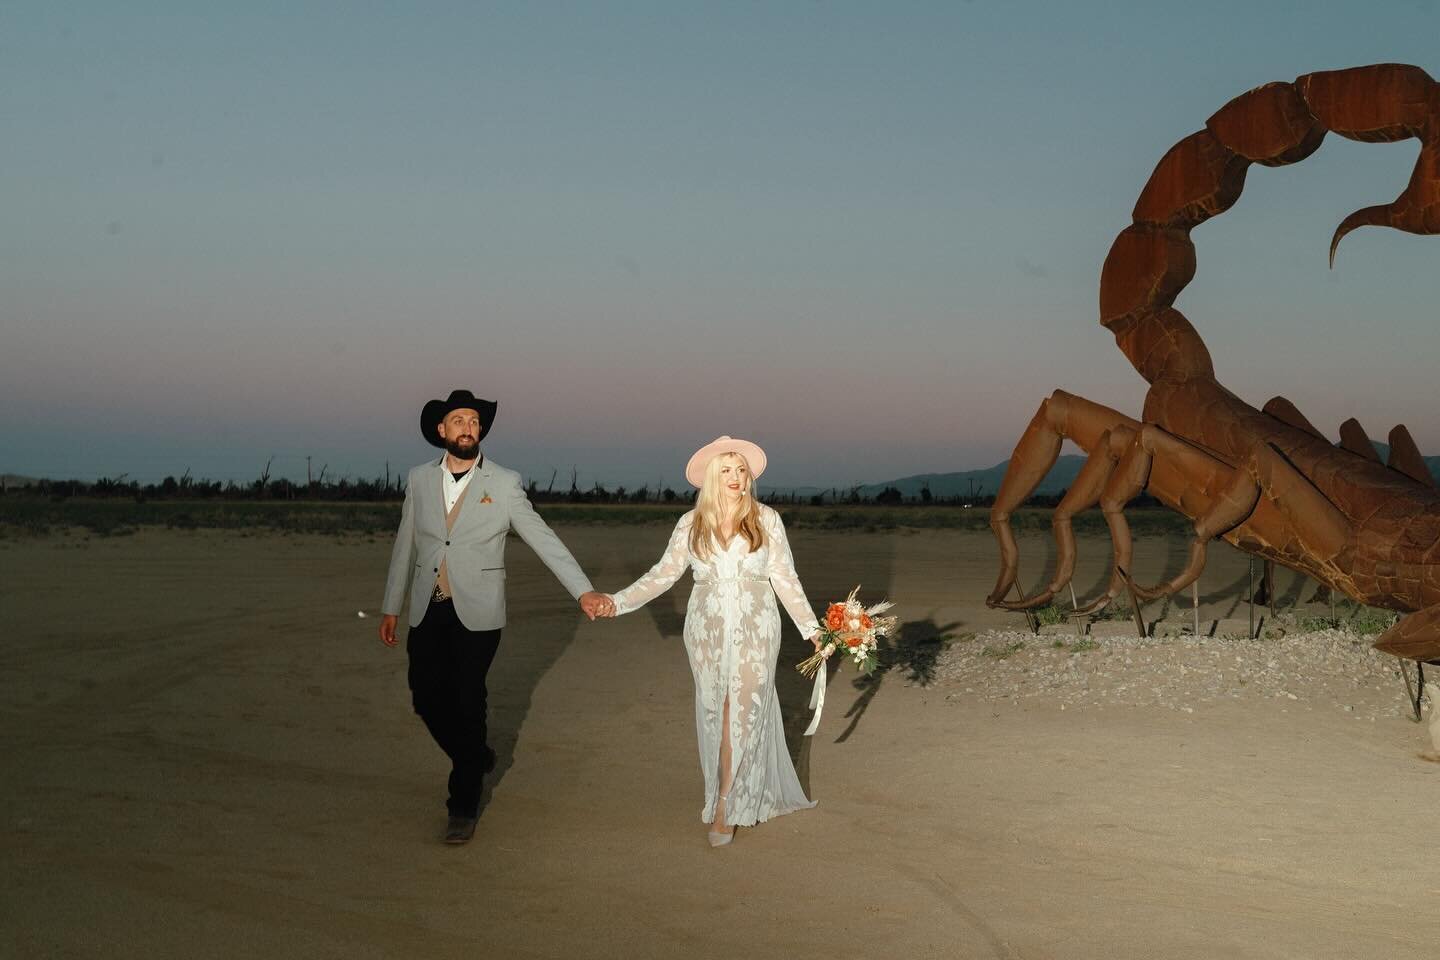 Desert dreamin&rsquo; with Chiara &amp; Brad 🌵💕
✨
#desertelopement #anzaborrego #sandiegoelopement #elopementphotographer #destinationweddingphotographer